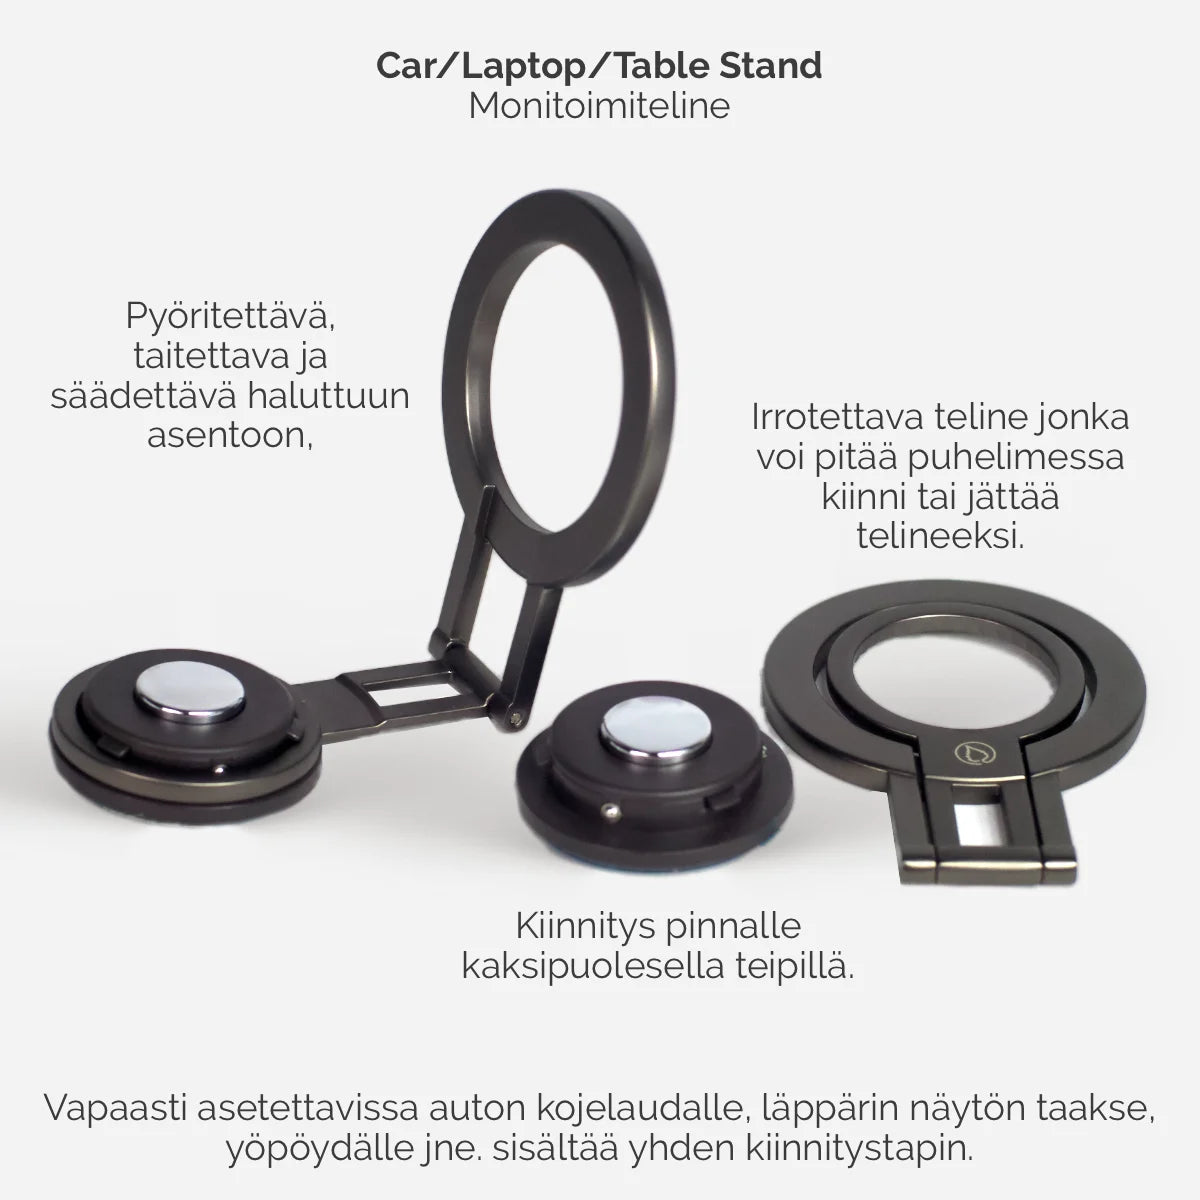 Finnish Army Camo Phone Case - M05